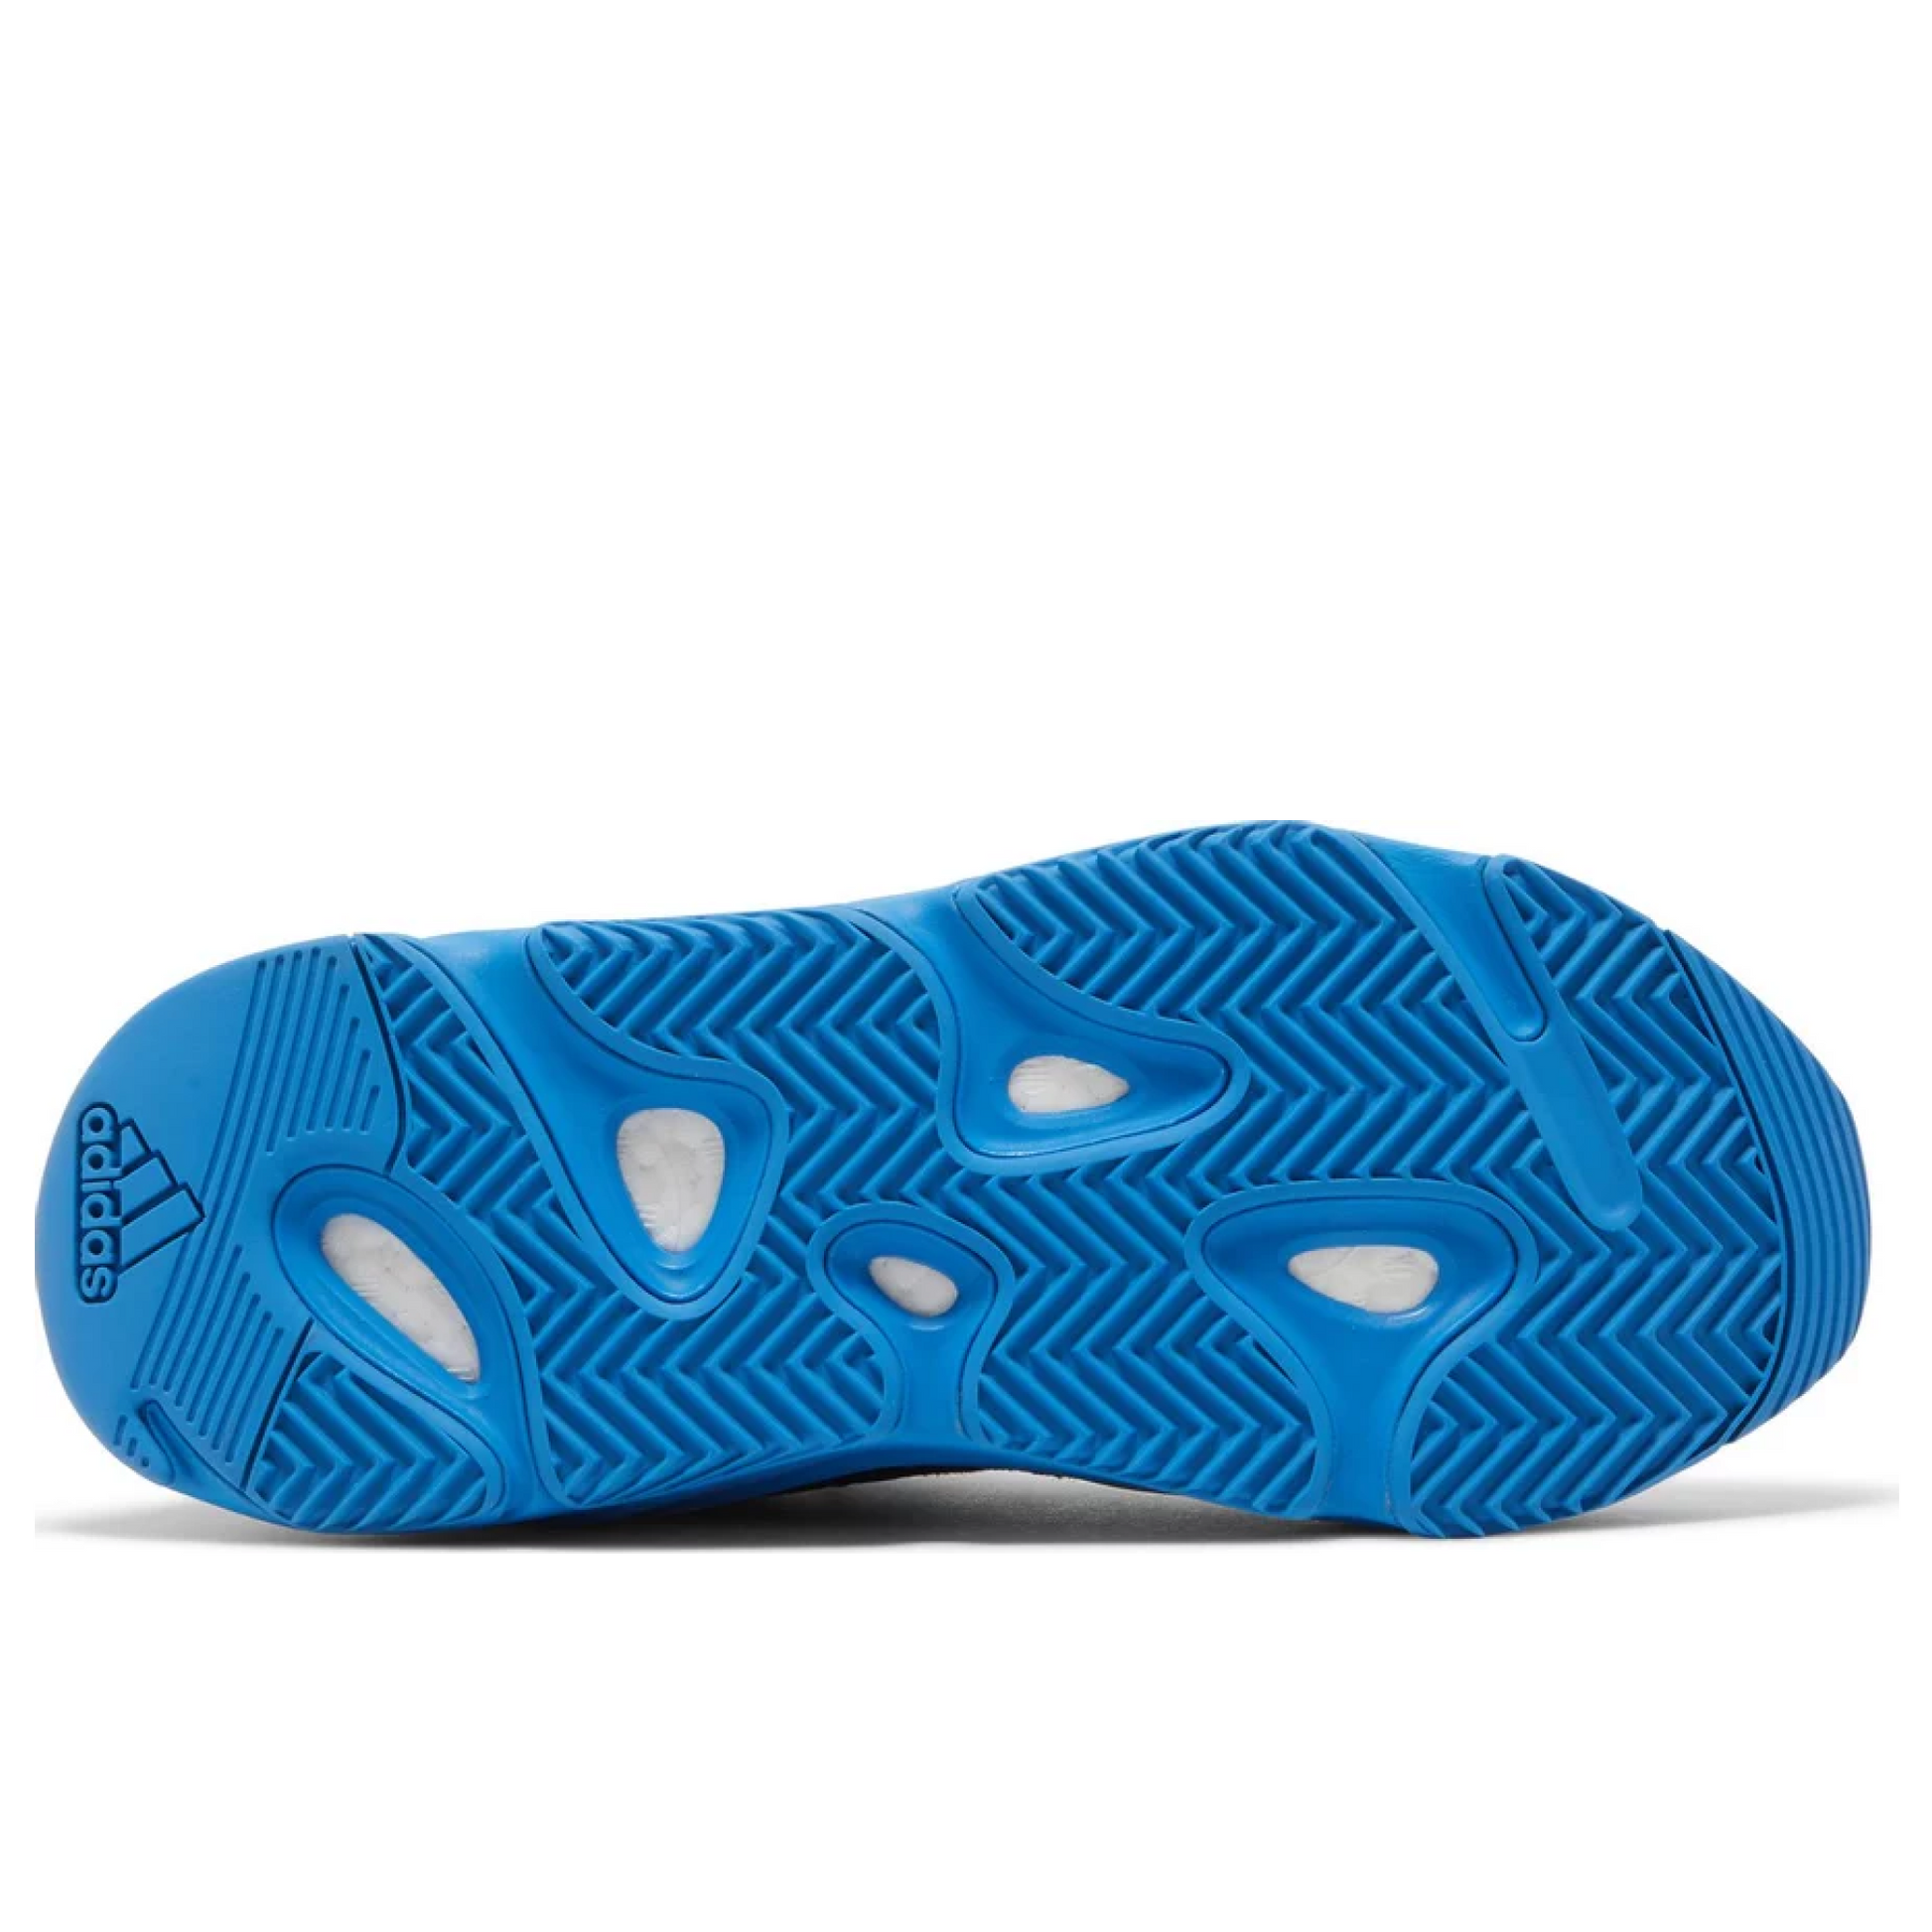 Adidas Yeezy Boost 700 Hi-Res Blue Yeezy